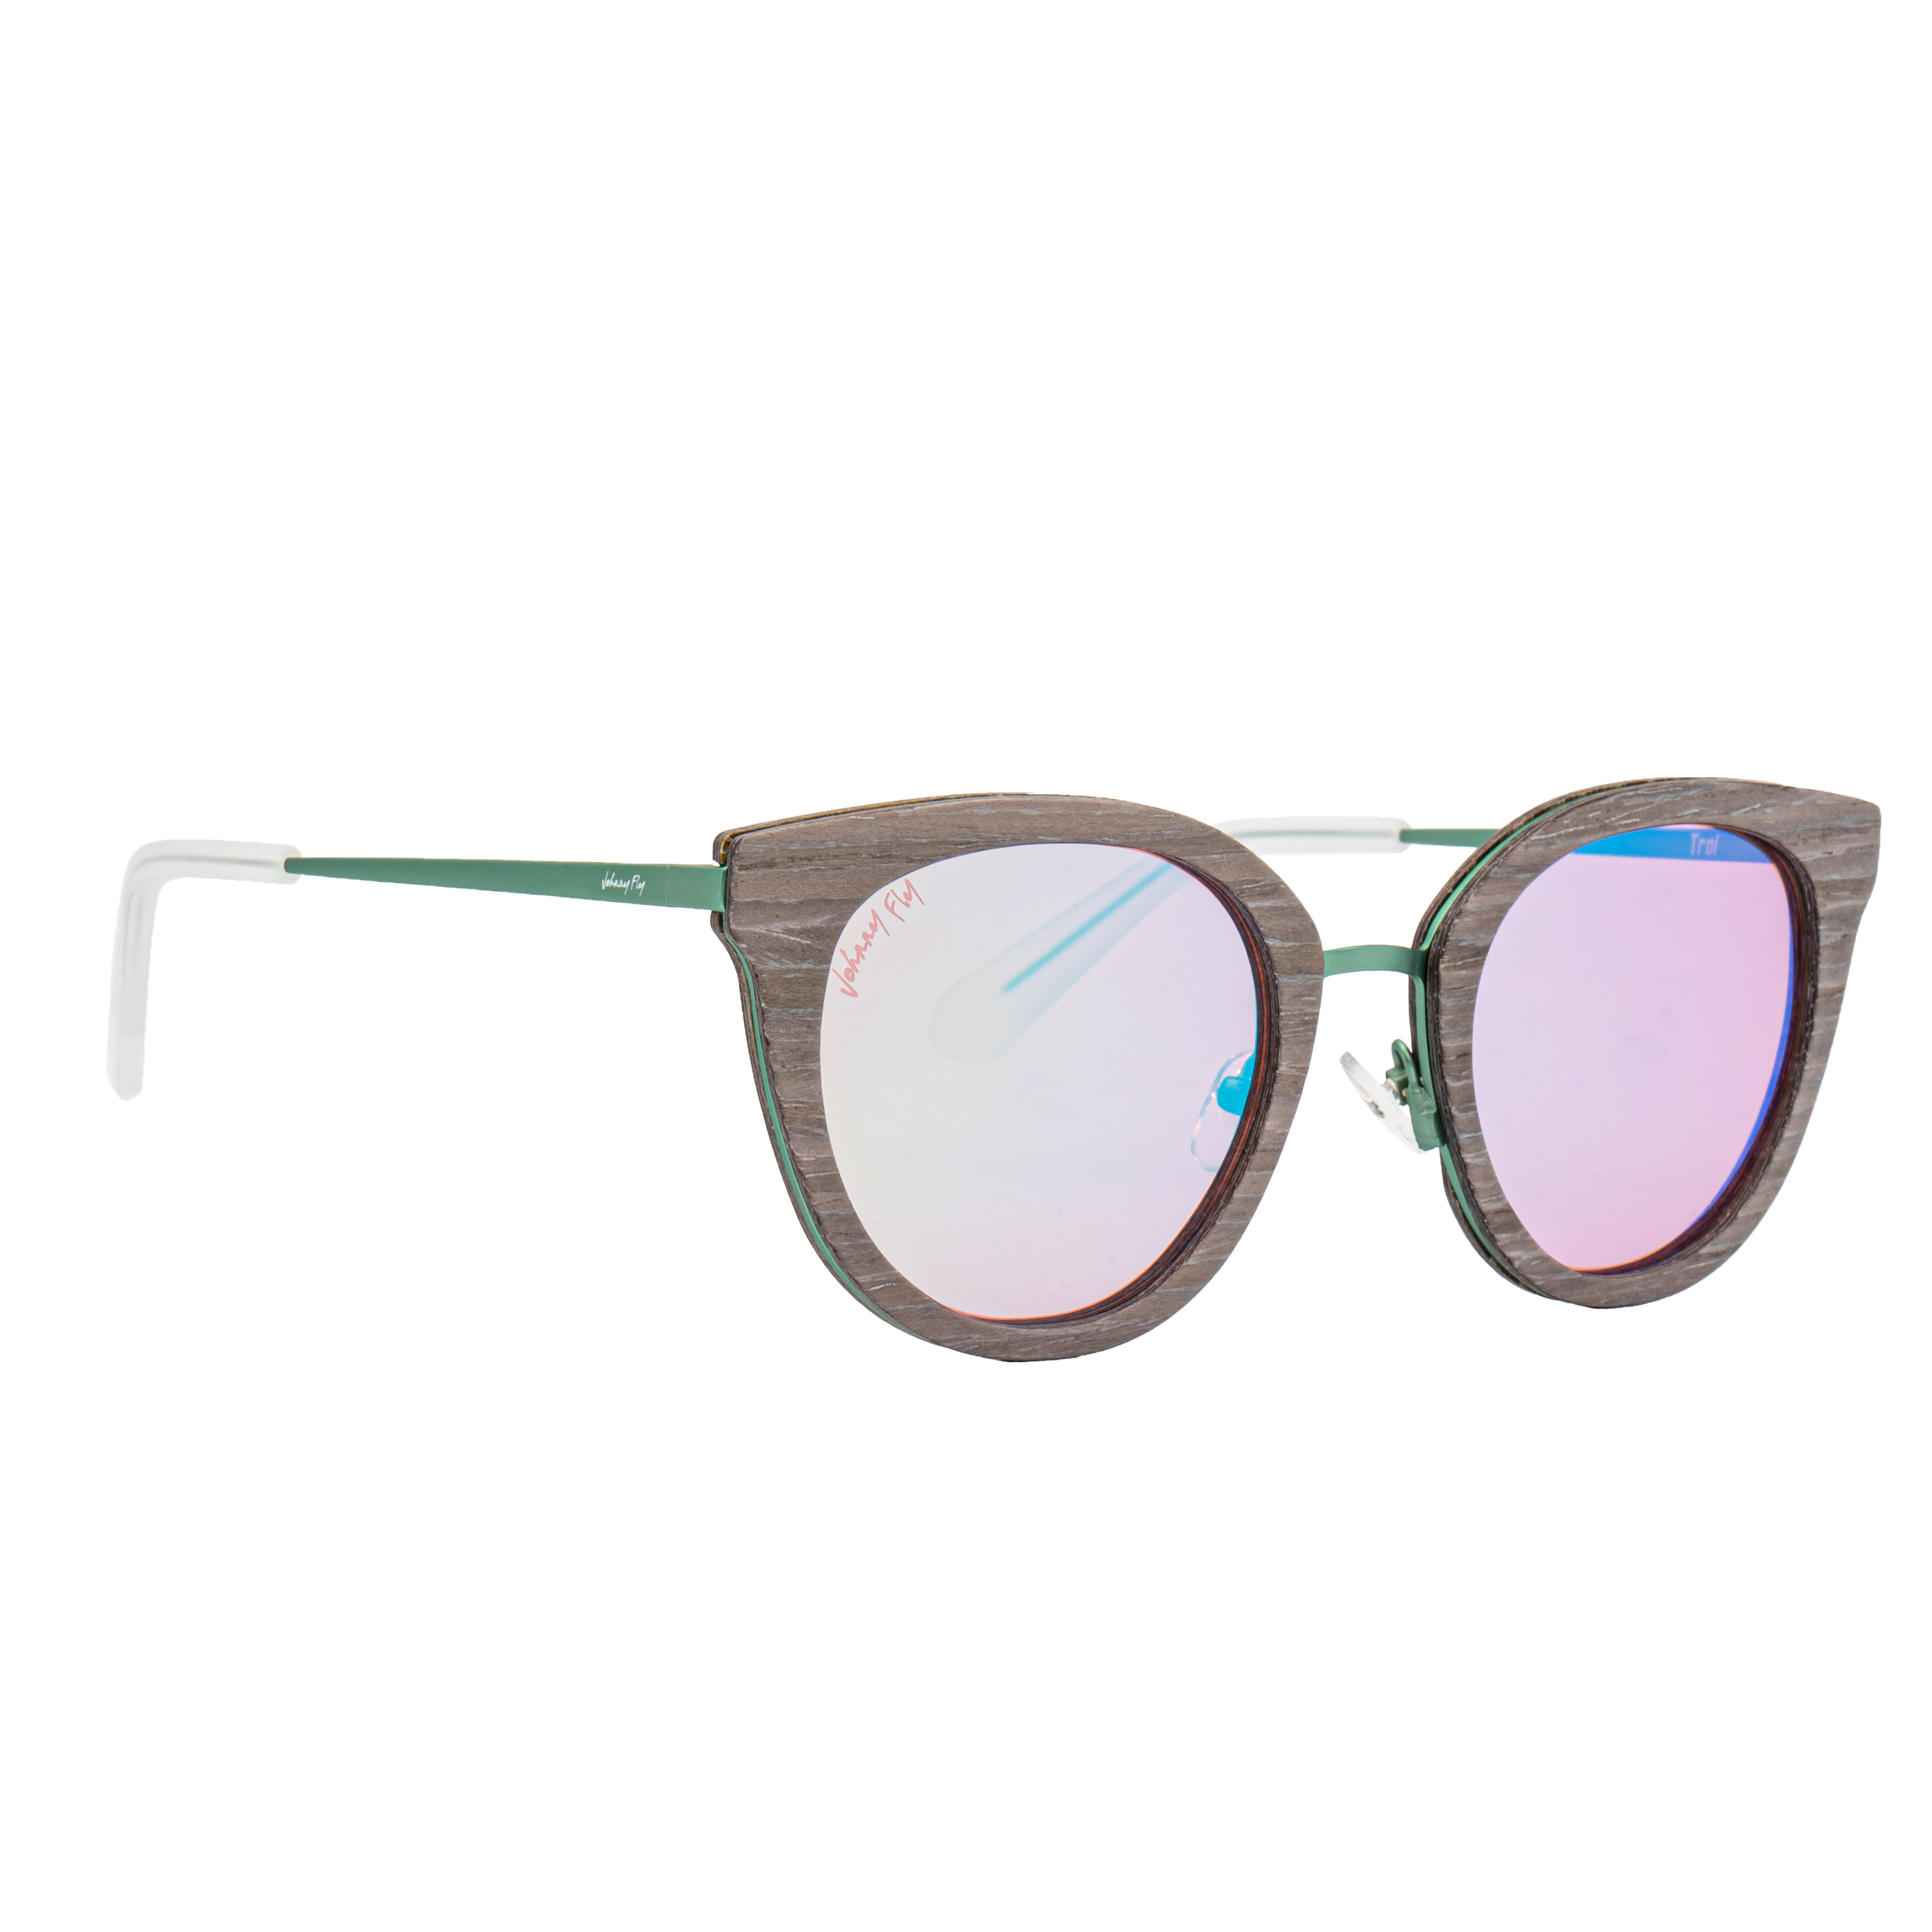 TROI - Teal - Sunglasses - Johnny Fly Eyewear #color_teal